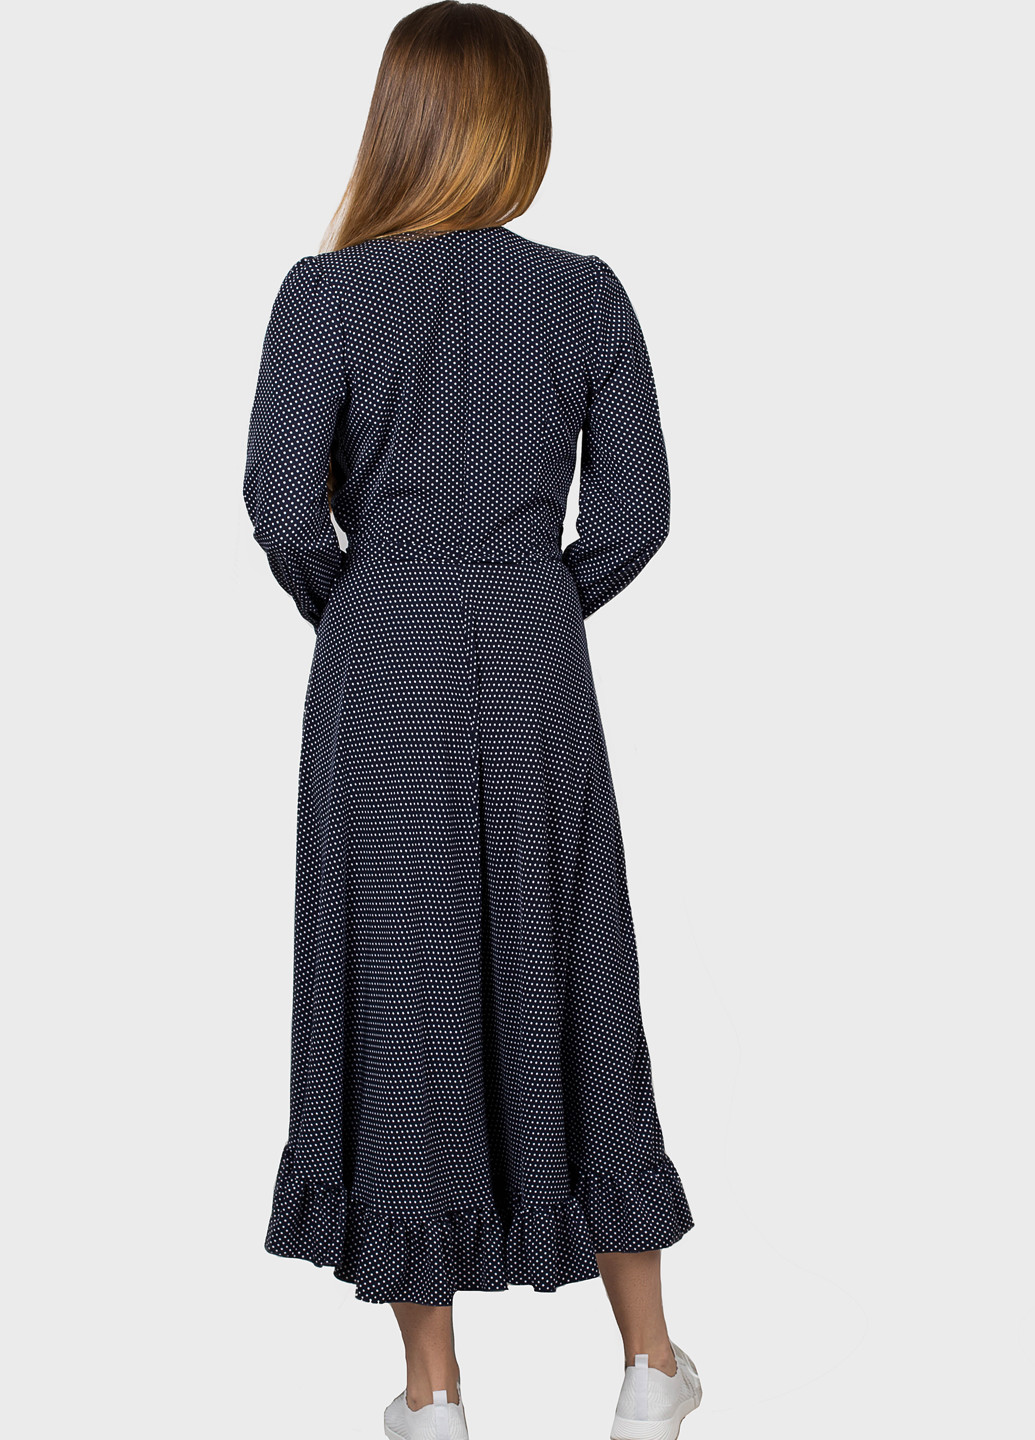 Темно-синее кэжуал платье на запах O`zona milano в горошек